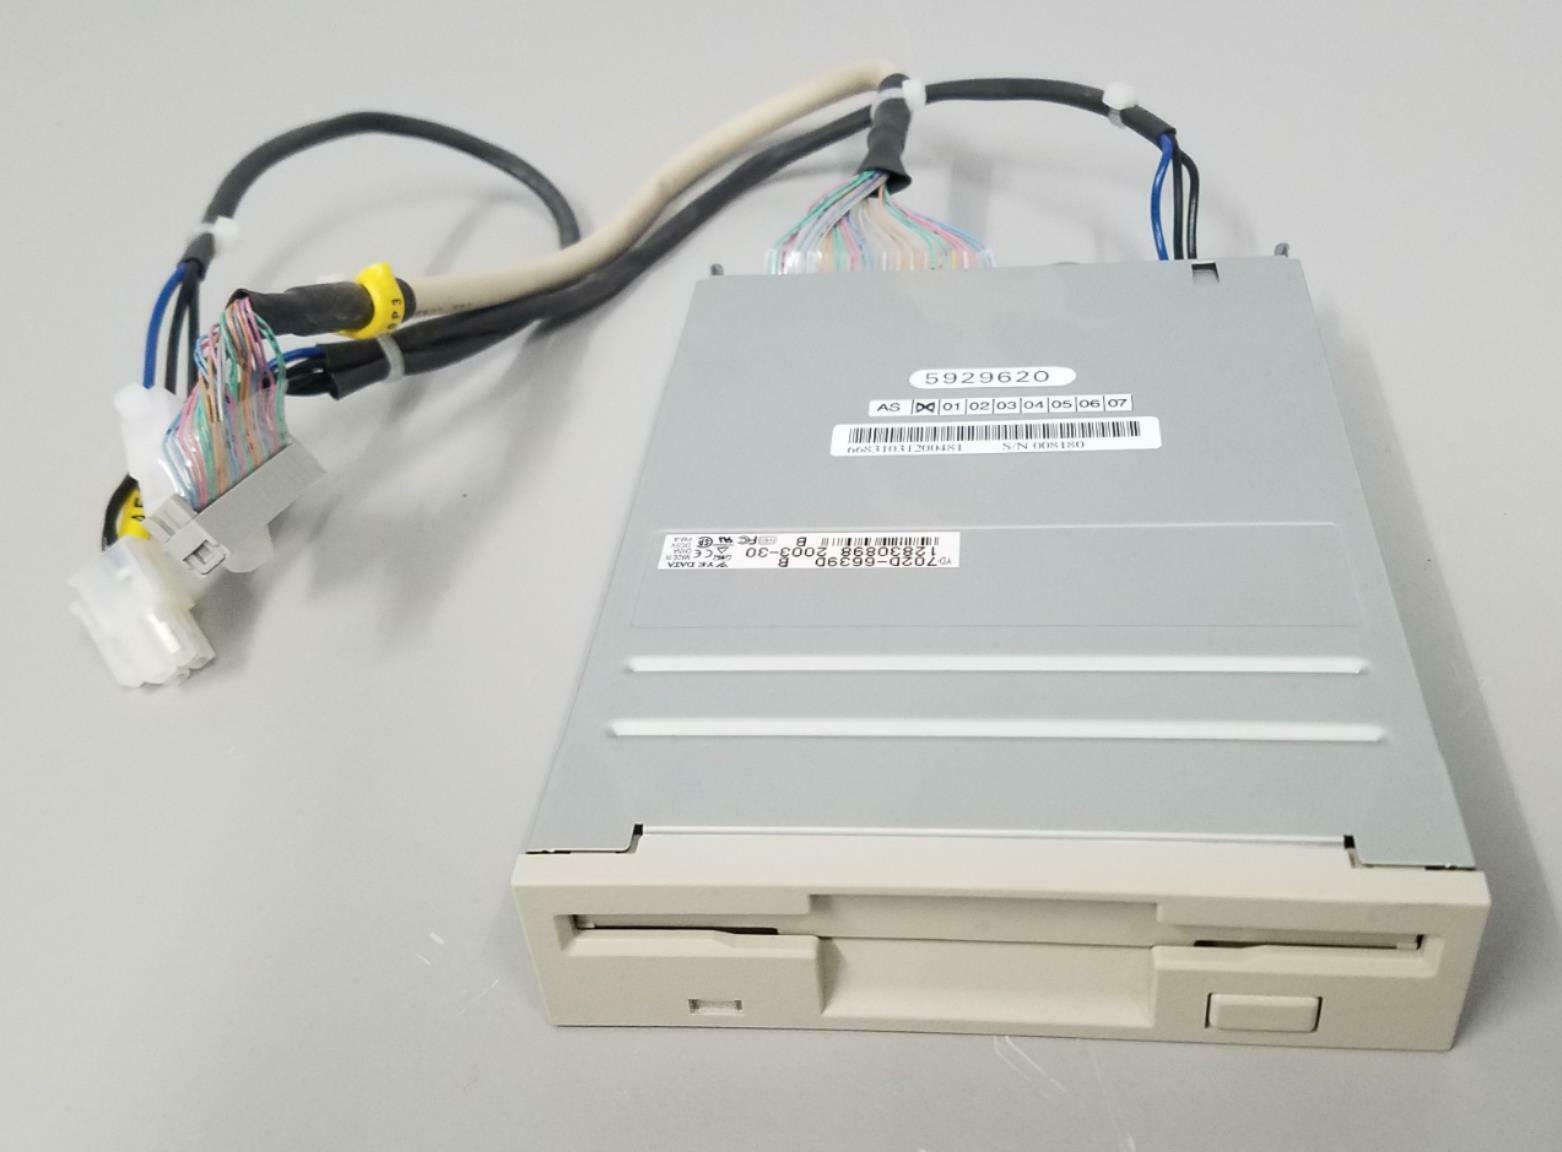 Siemens Ultrasound Sonoline Adara Hard Disk DIAGNOSTIC ULTRASOUND MACHINES FOR SALE